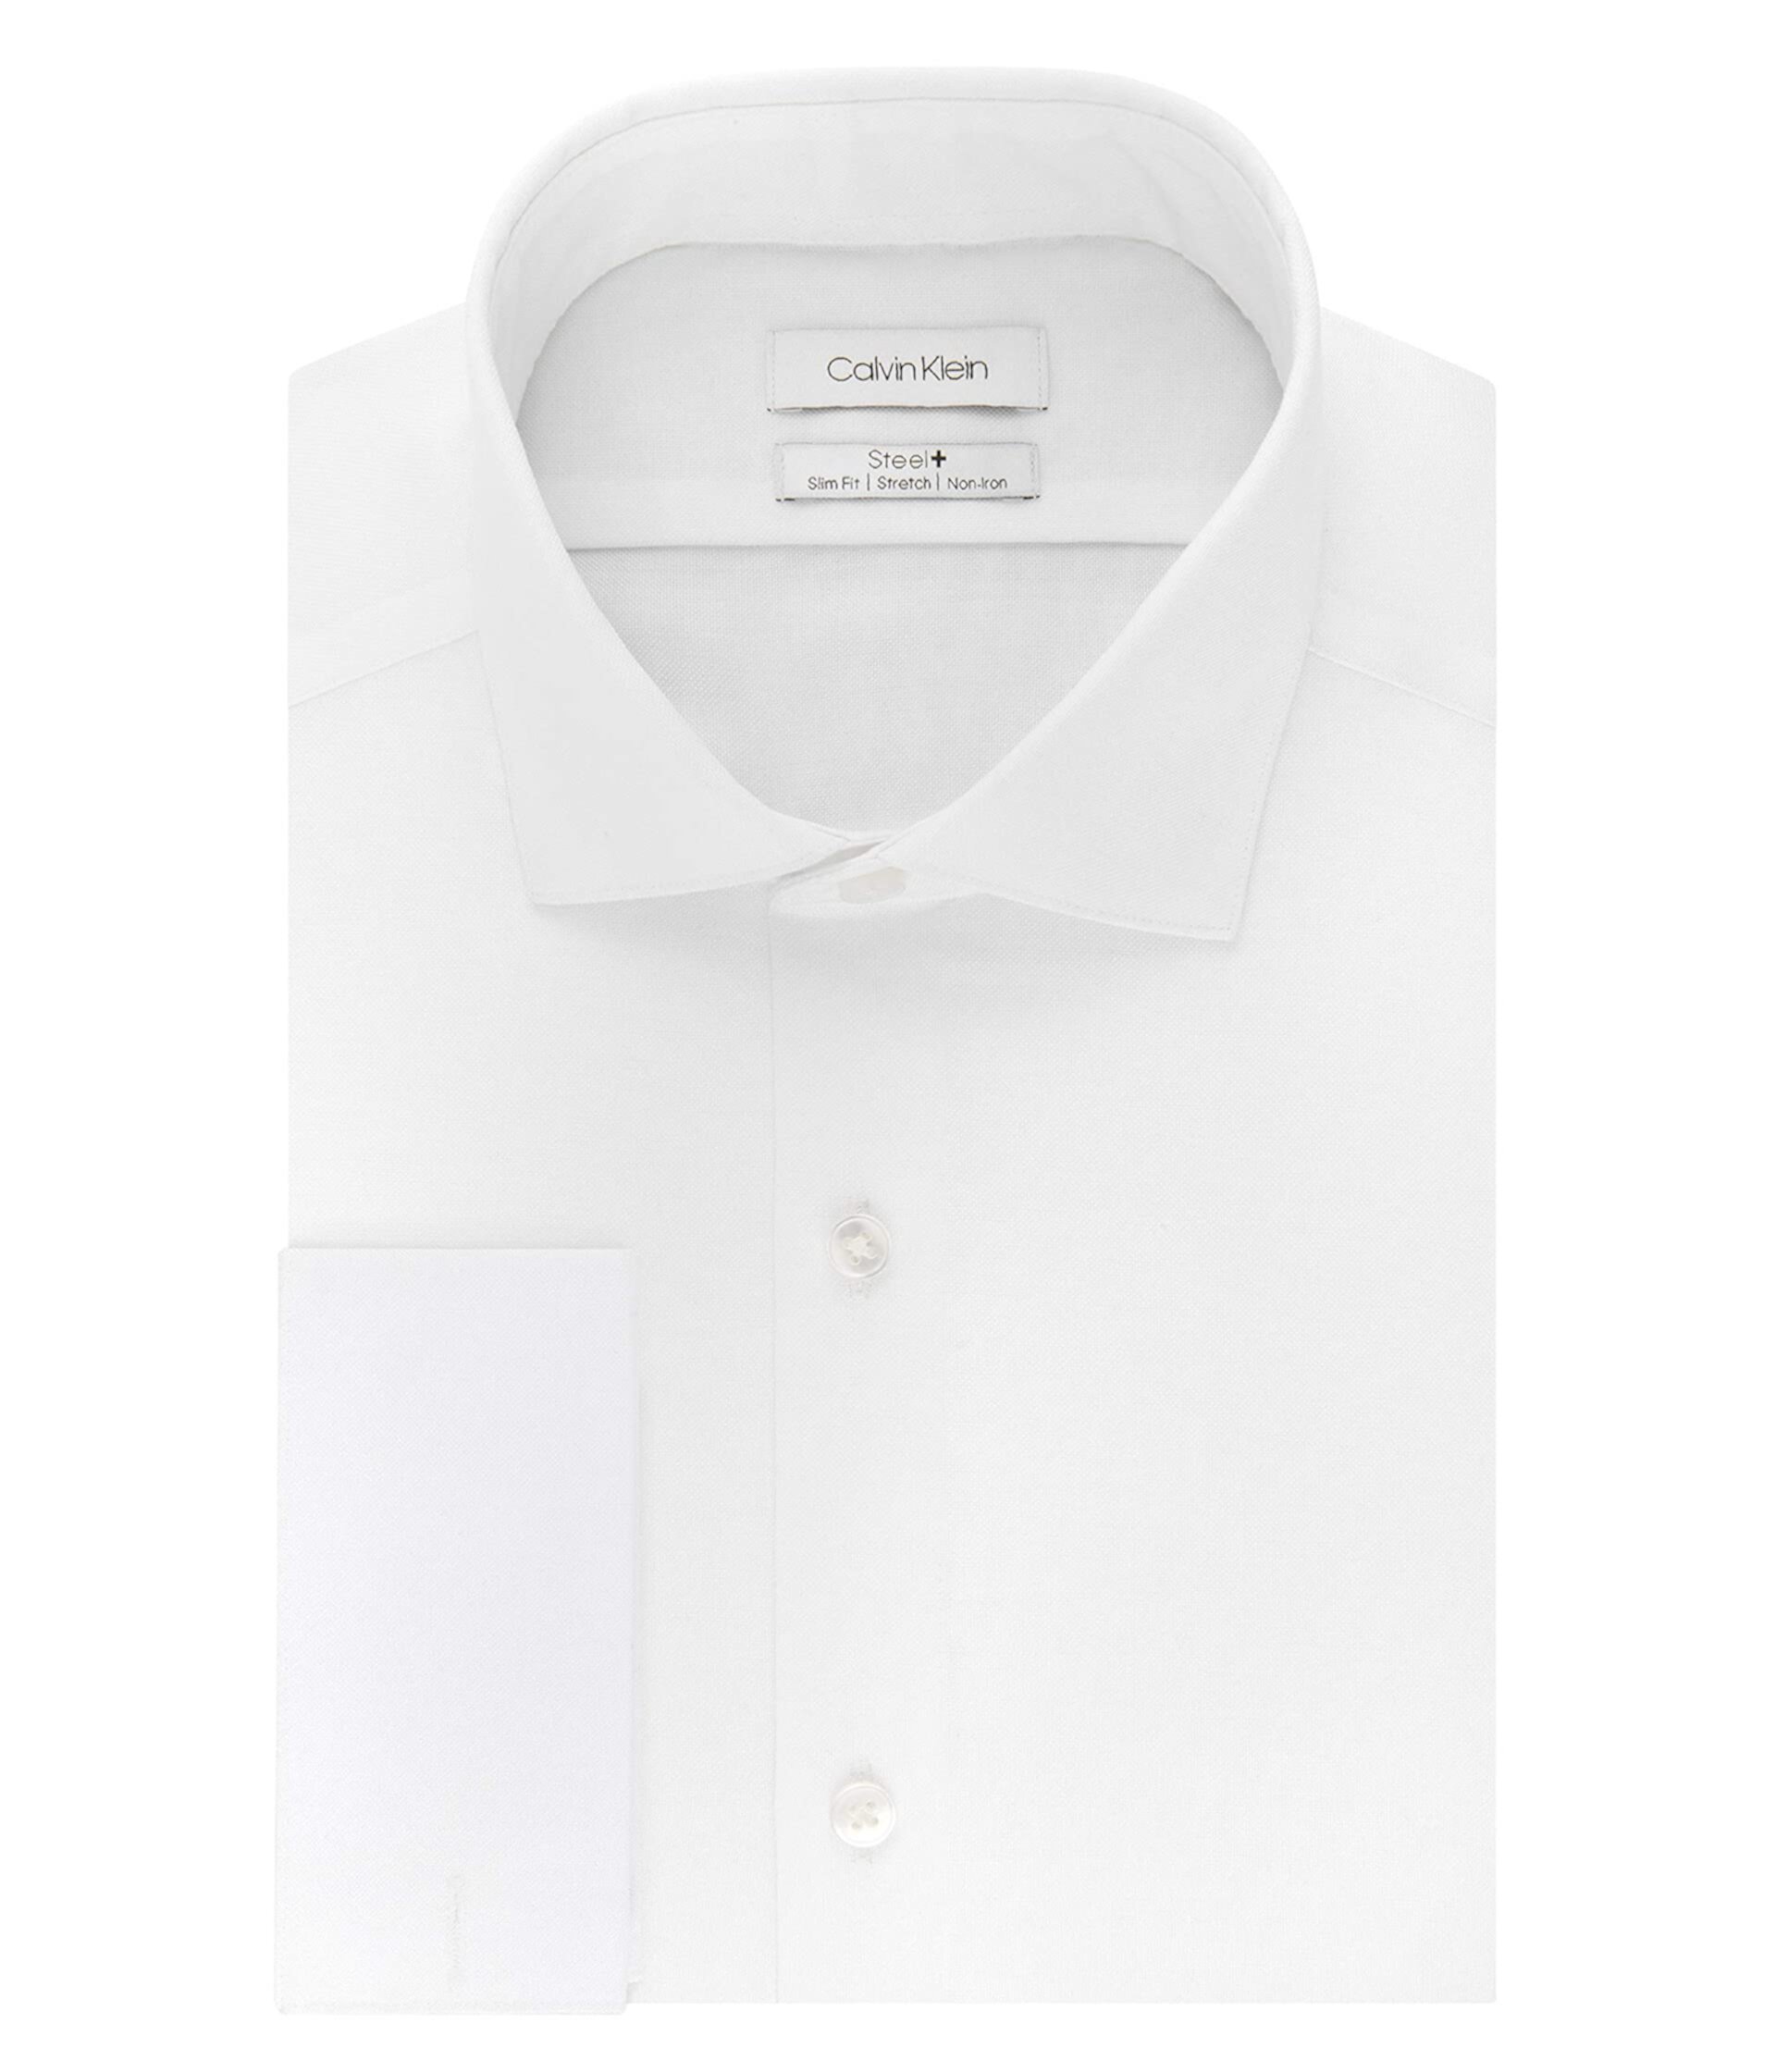 Мужская классическая рубашка Slim Fit Non Iron Stretch Solid French Cuff Calvin Klein